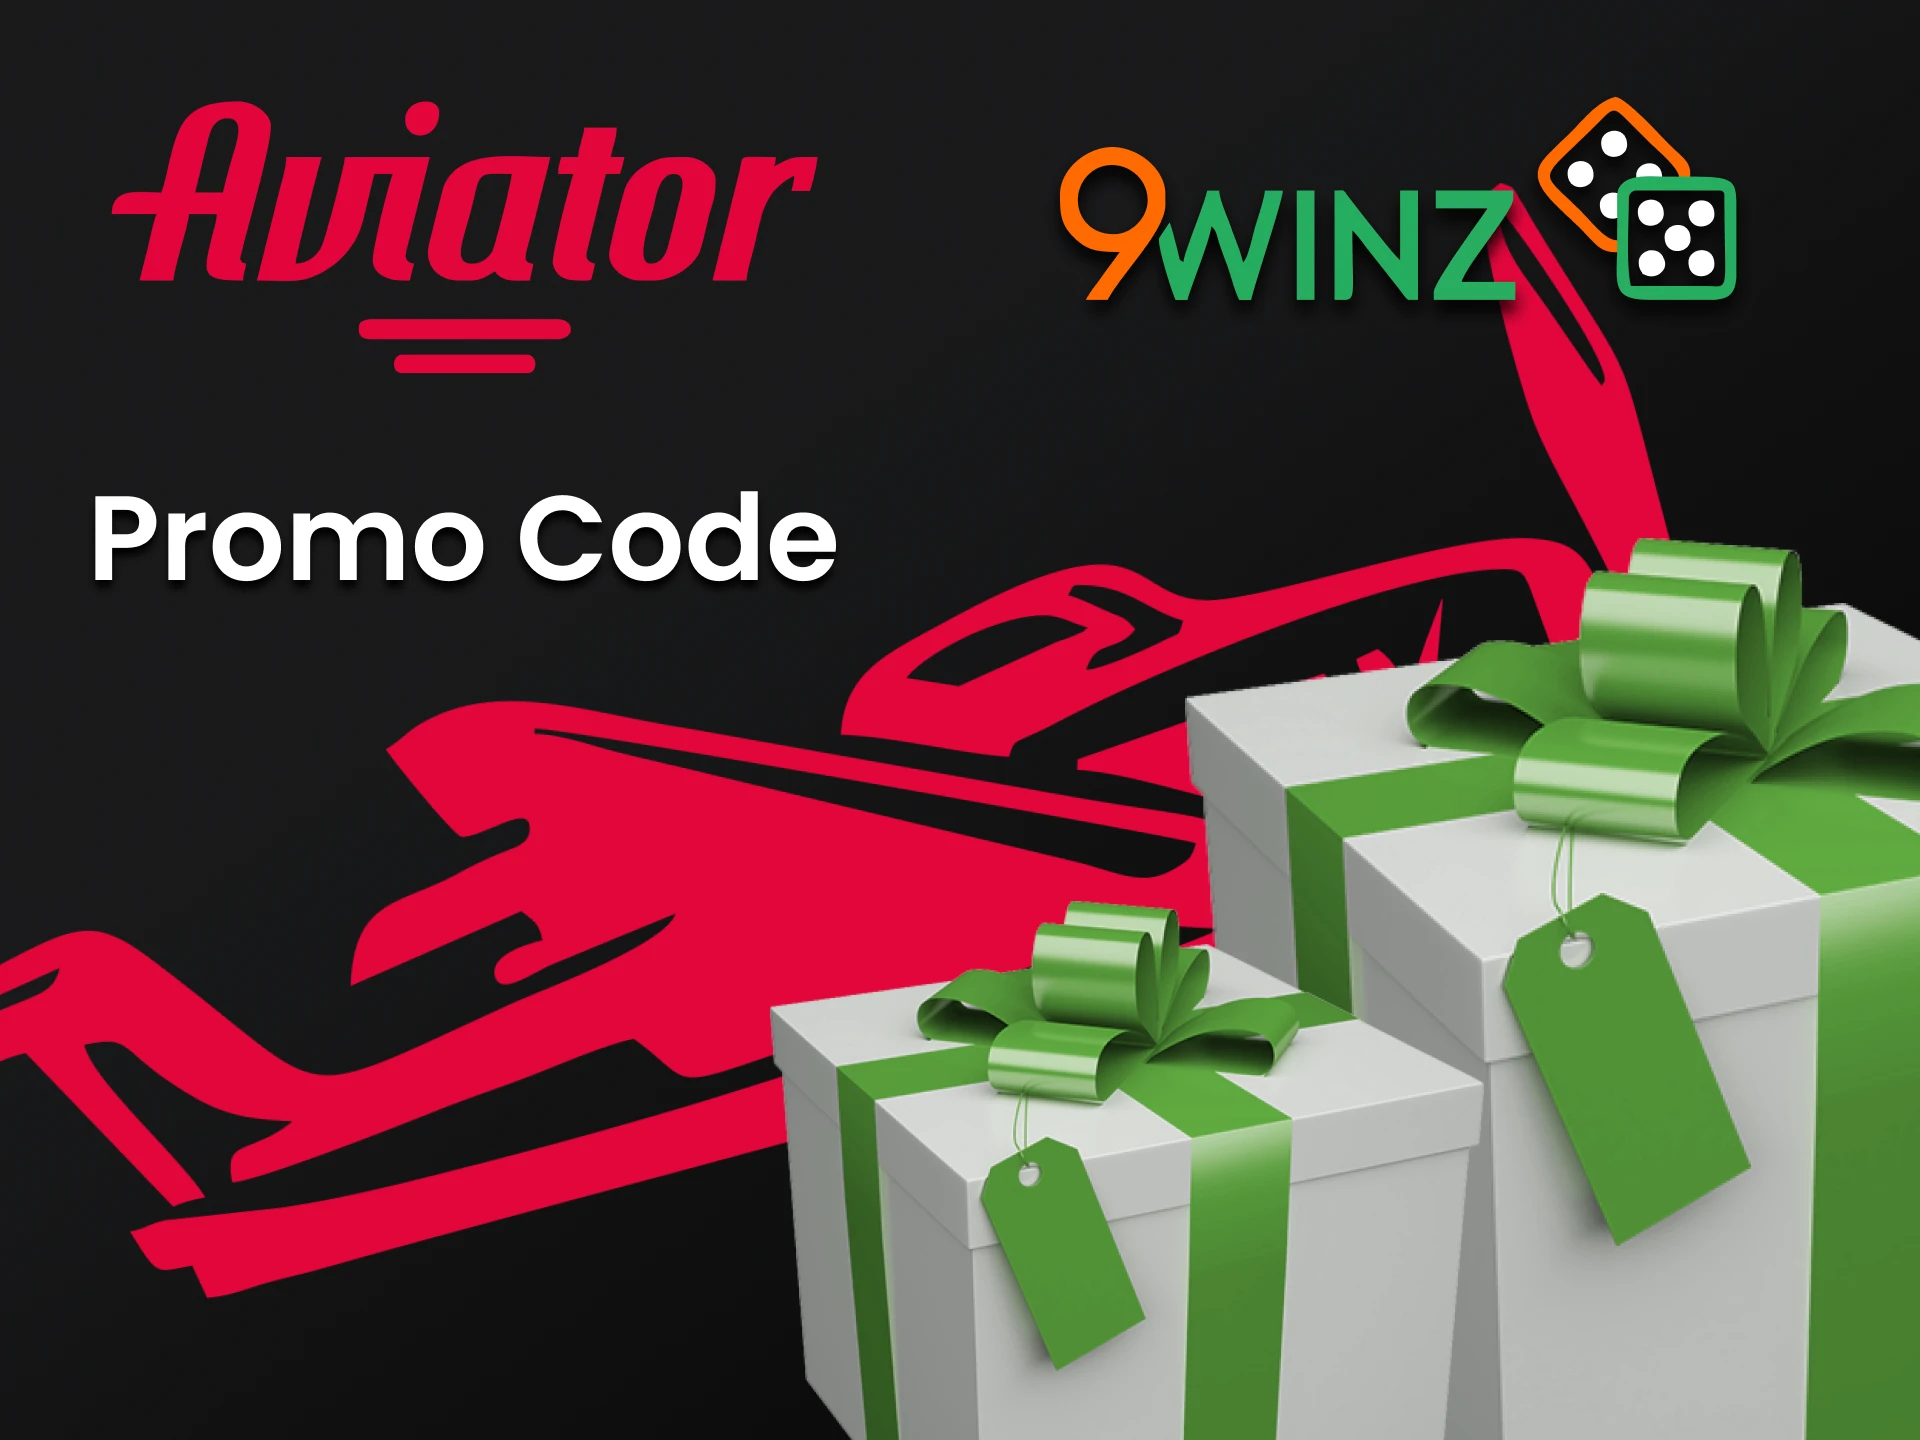 Enter the bonus promo code for the Aviator from 9winz.